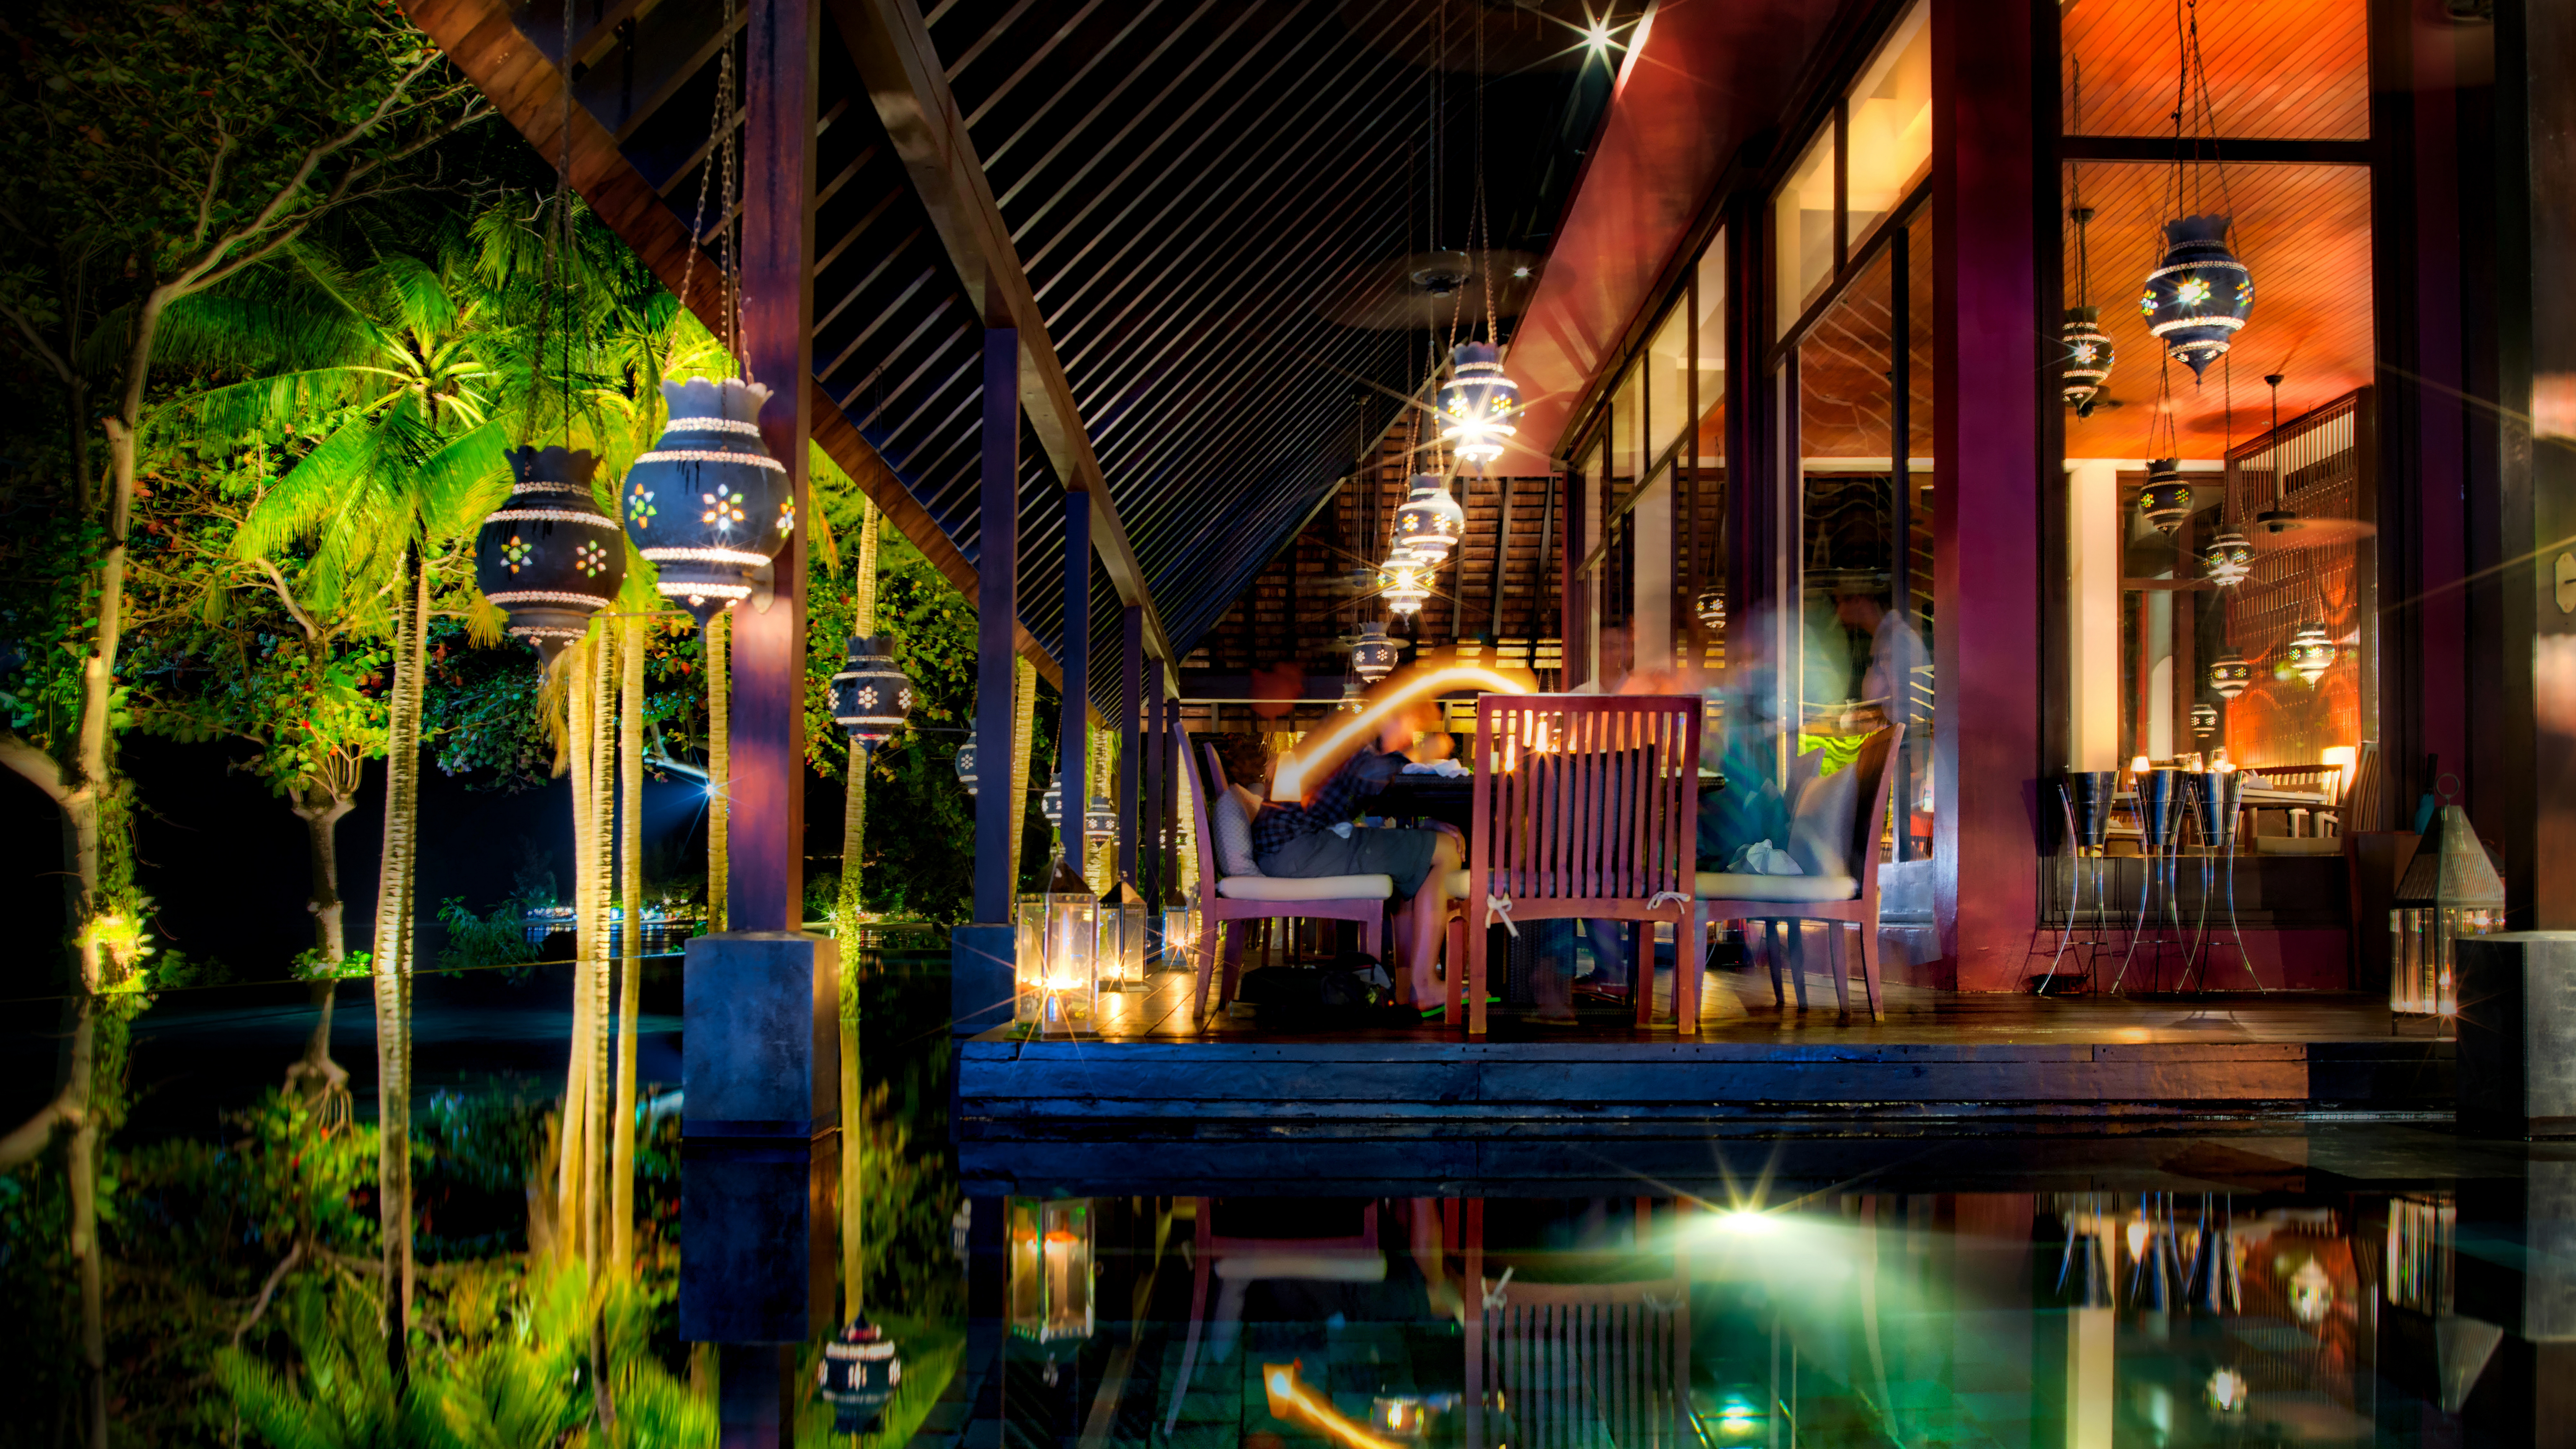 Photography Trey Ratcliff Restaurant Garden Night Lights Thailand Krabi 7680x4320